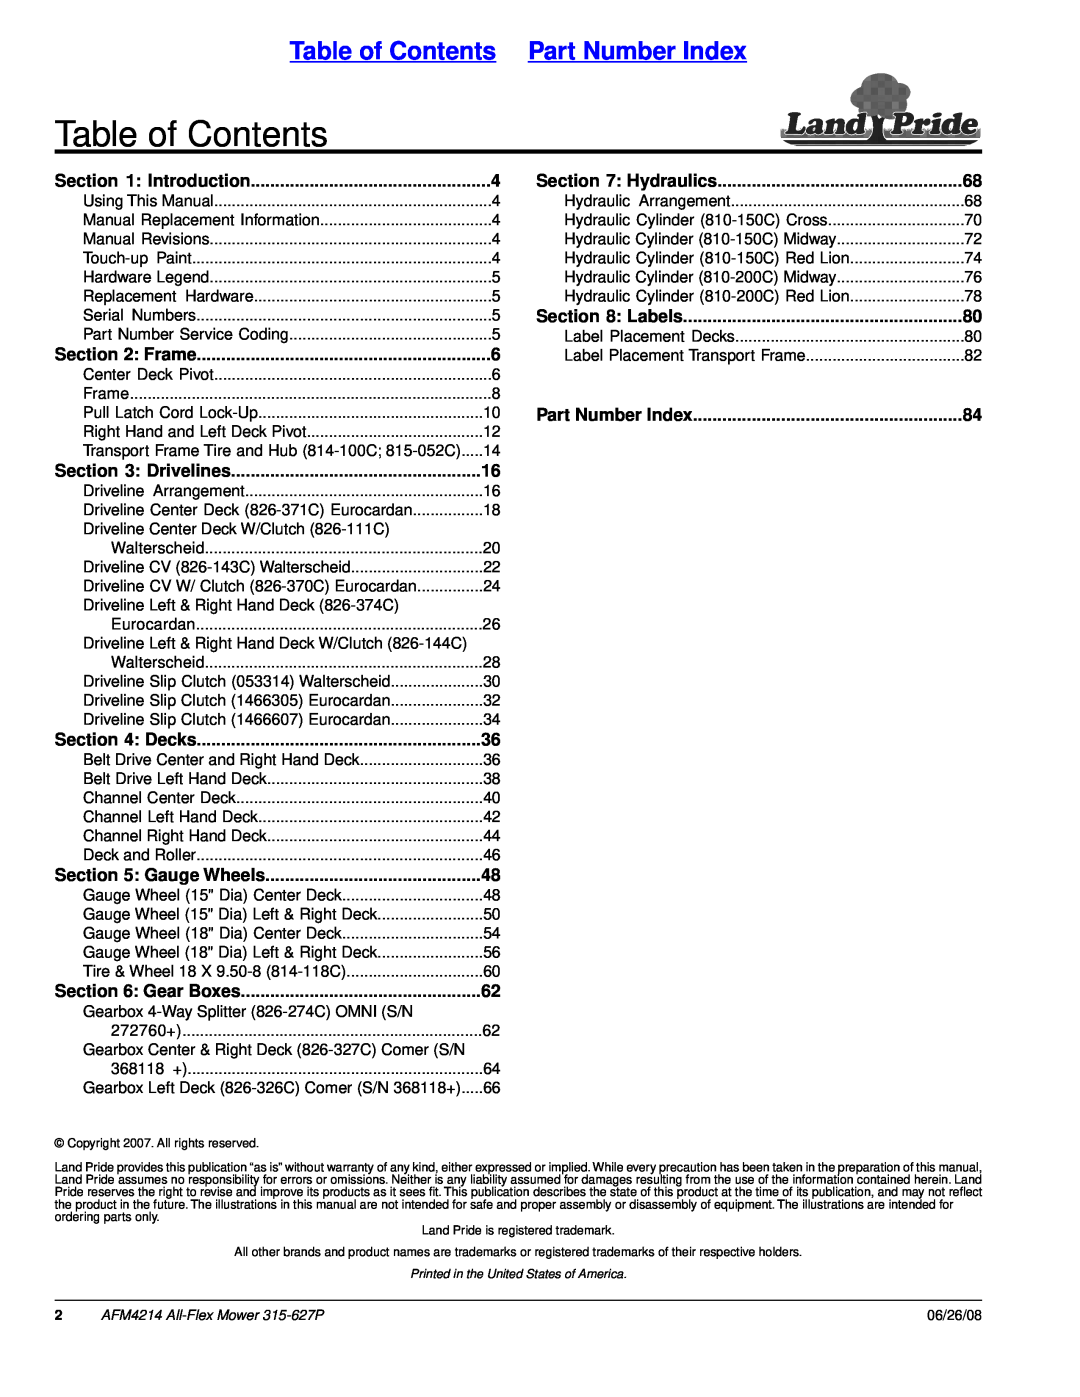 Land Pride AFM4214 Table of Contents Part Number Index, Introduction, Hydraulics, Labels, Frame, Drivelines, Decks 